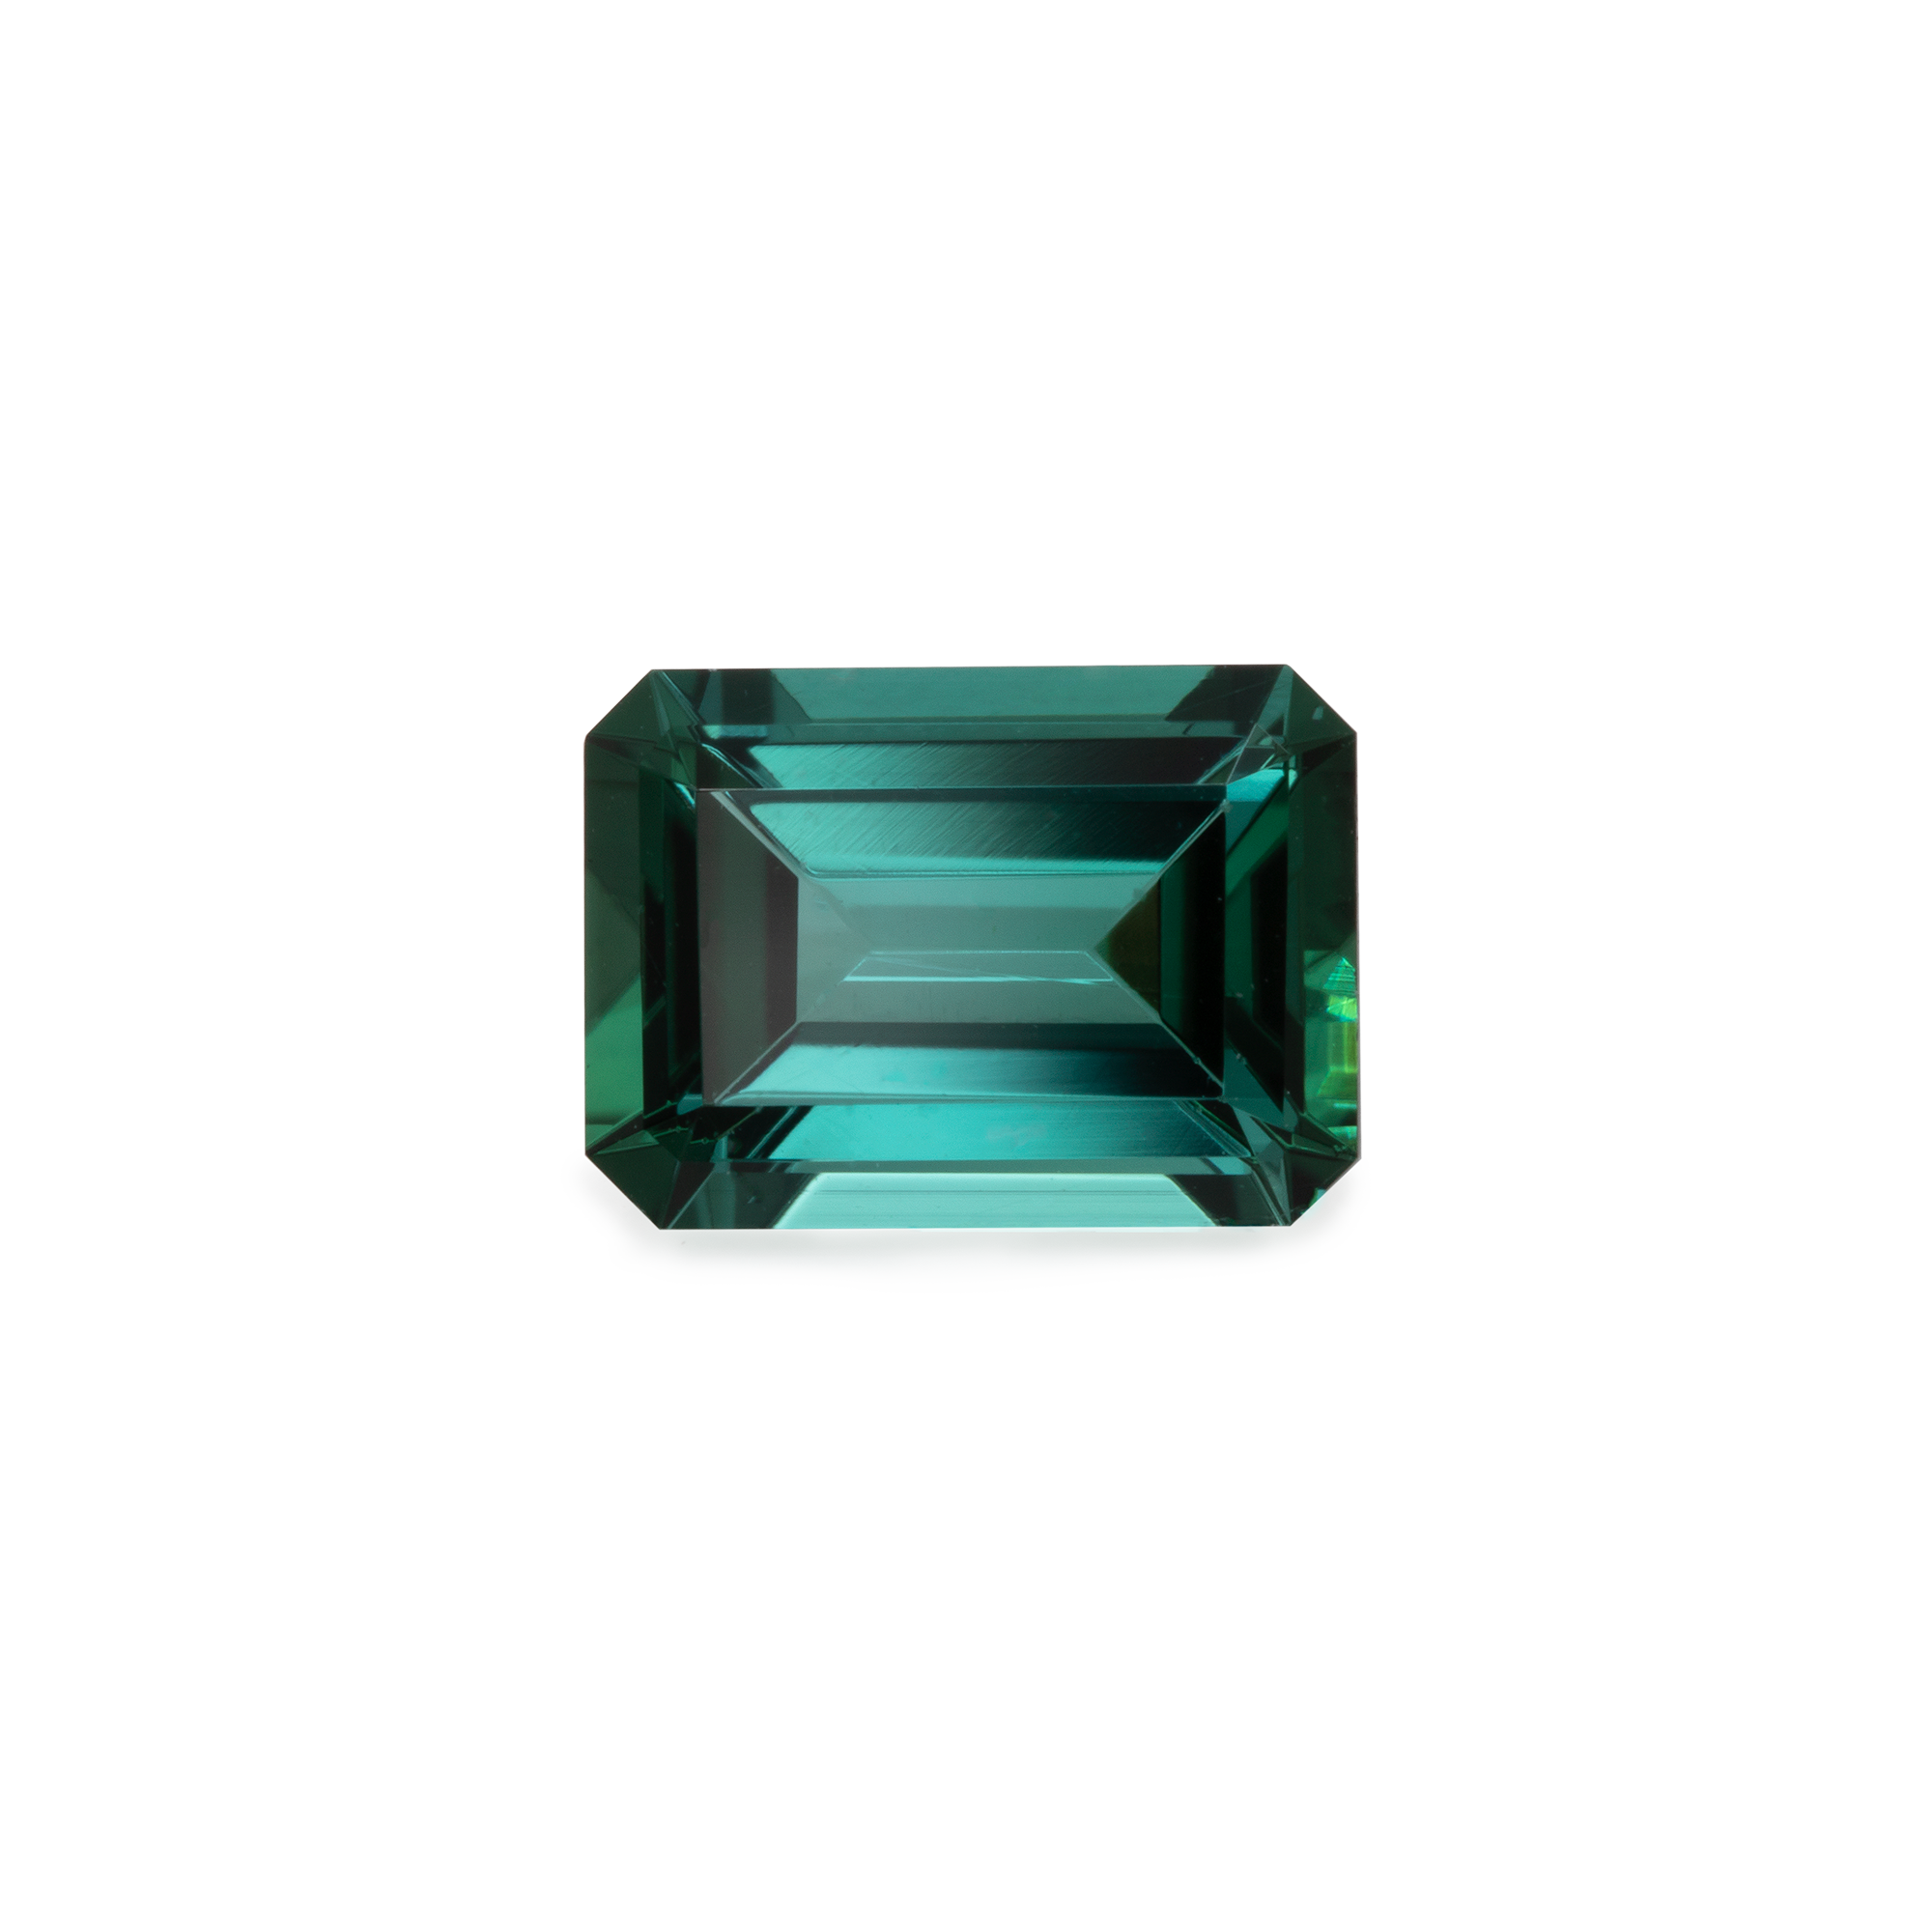 Turmalin - blau/grün, achteck, 7x5 mm, 0,96-0,99 cts, Nr. TR71001